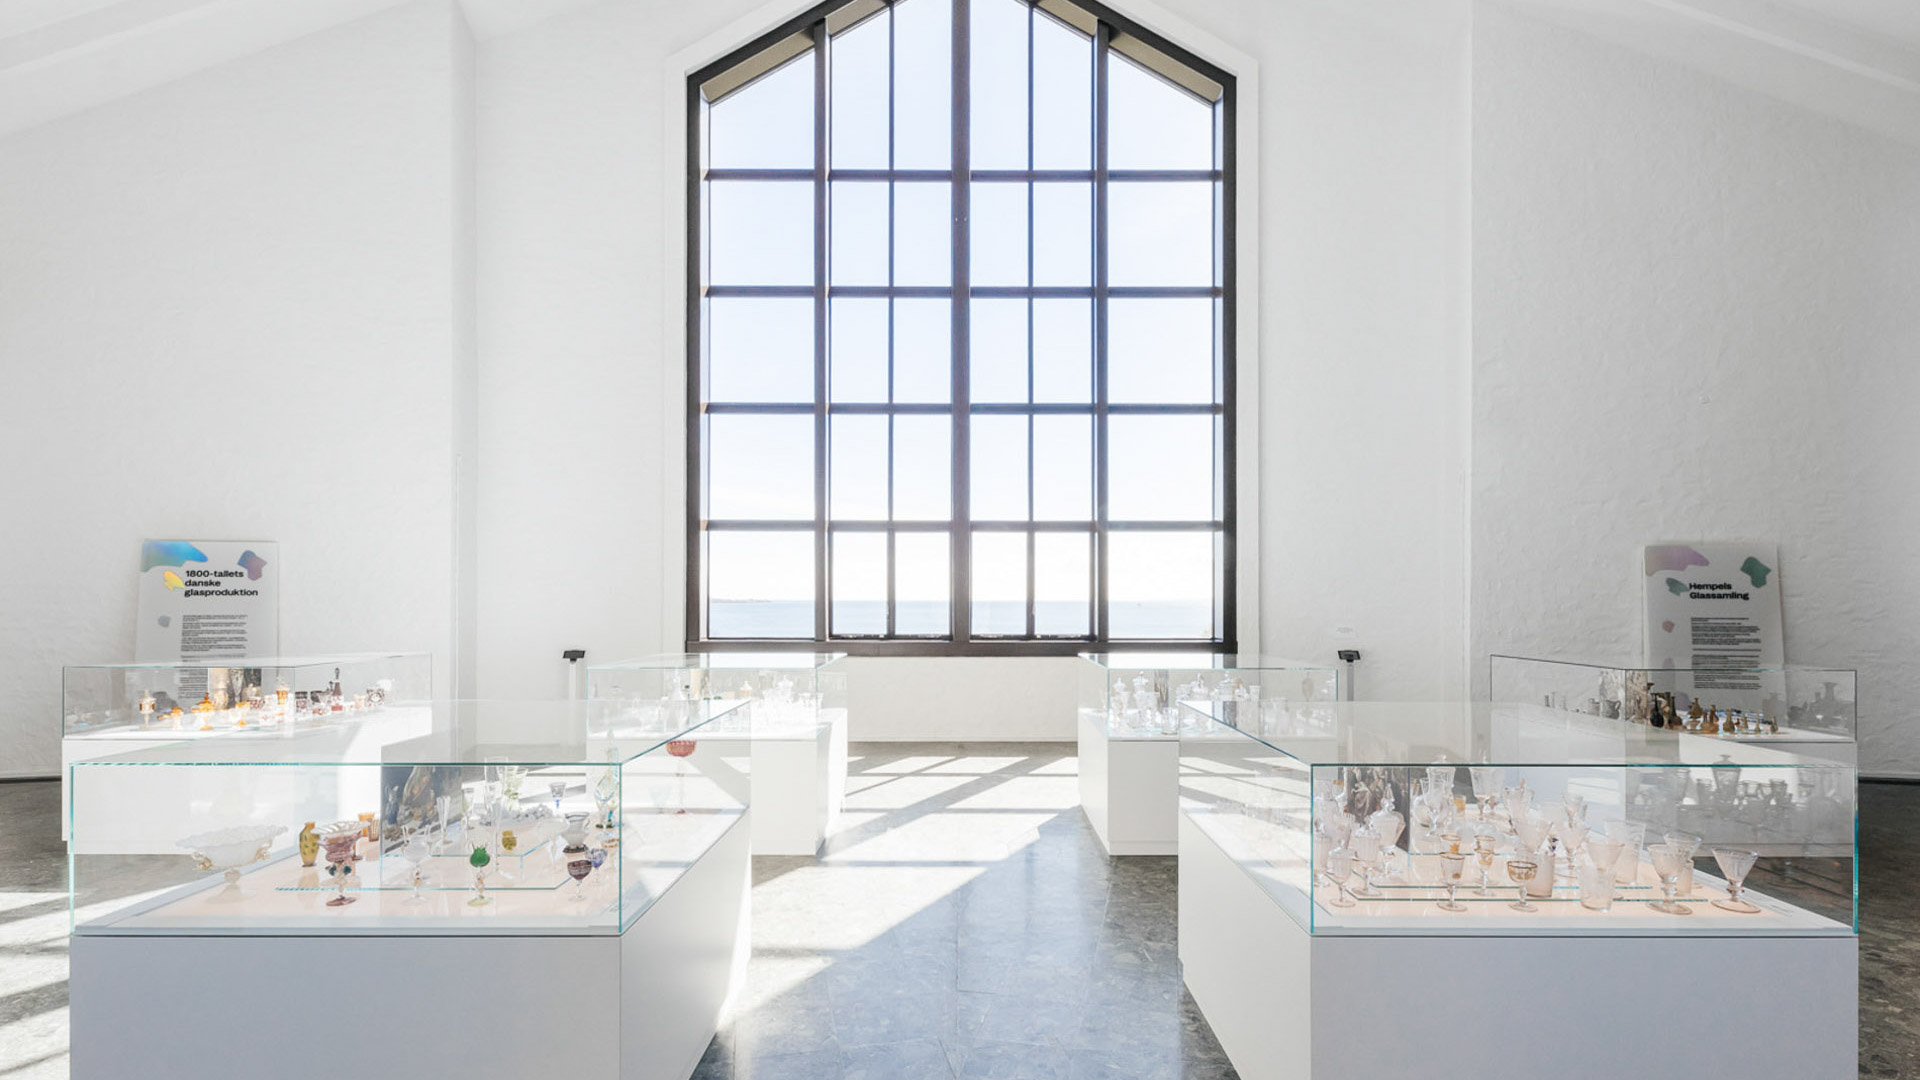 Glass museum, vitrine production, Showcase production, Graphic production